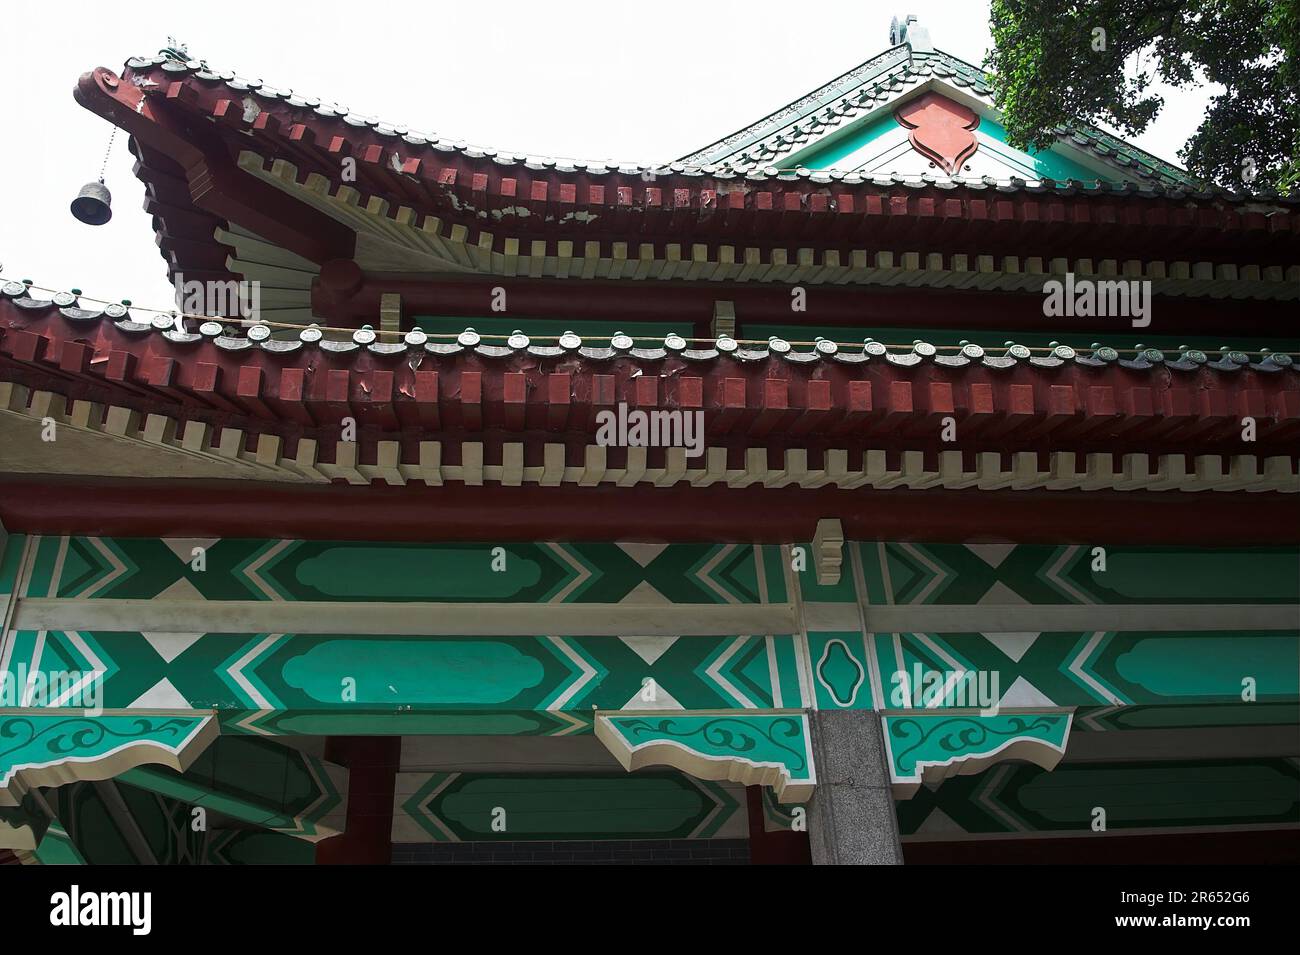 广州市 中國 Guangzhou, China; Temple of the Six Banyan Trees; Tempel der sechs Banyanbäume; 六榕寺 Stock Photo